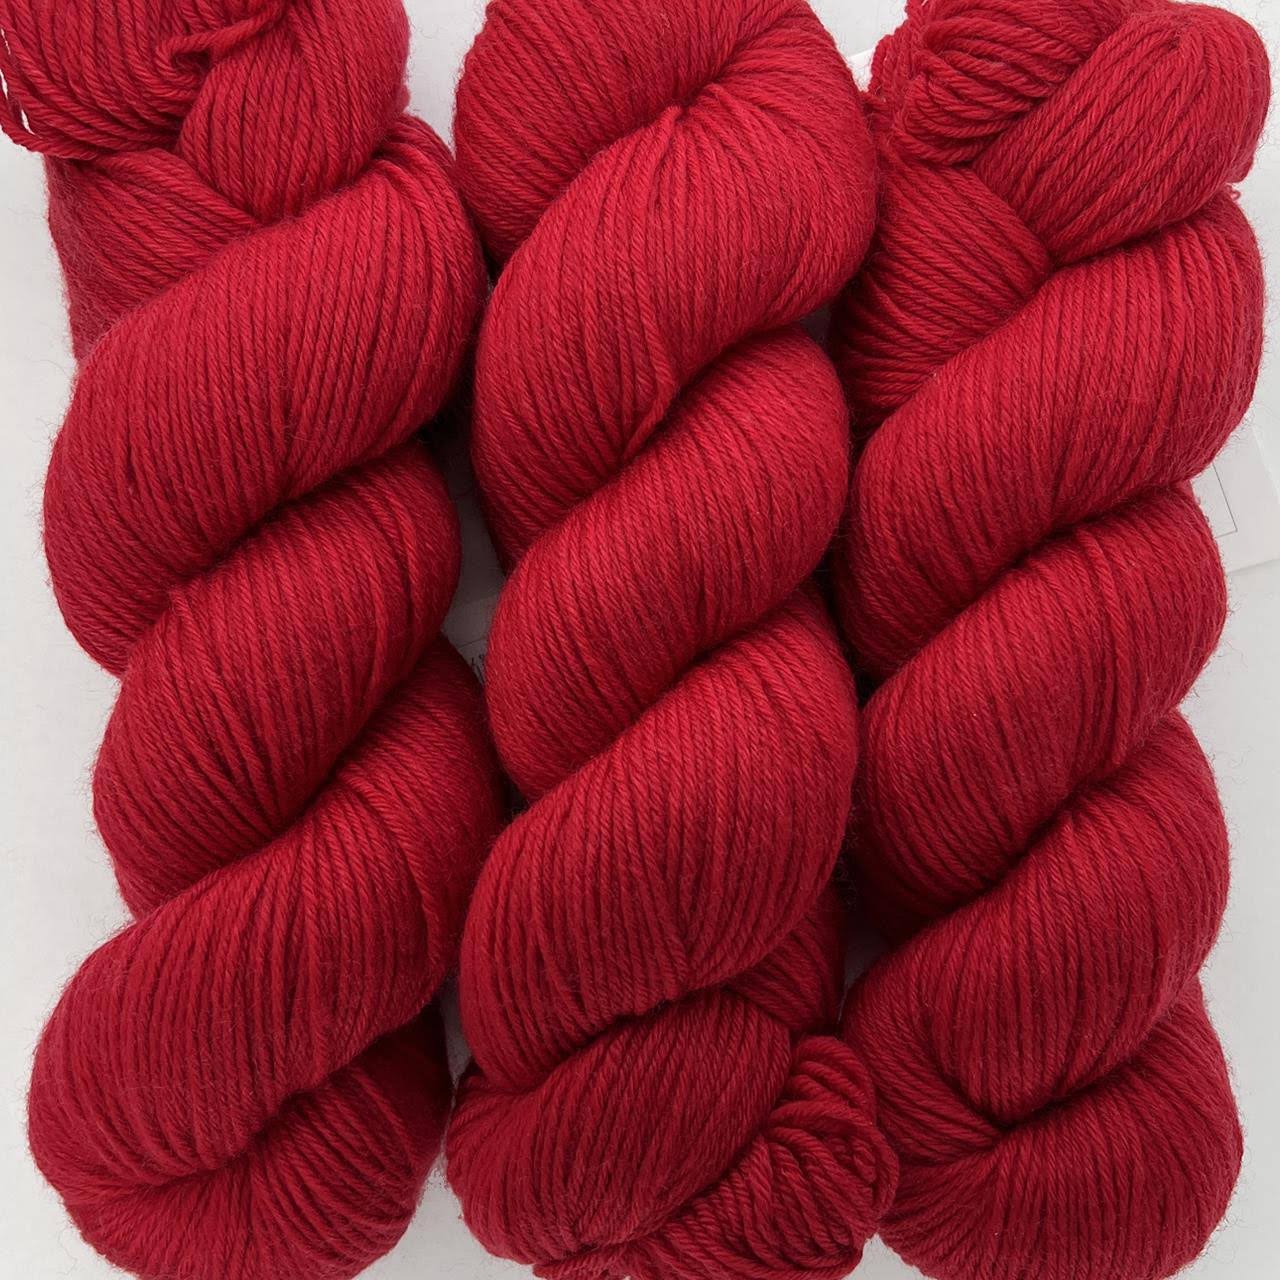 Cascade Yarns Heritage 6 - Christmas Red (5619) 100g (3.5oz) 75% Merino Wool 25% Nylon